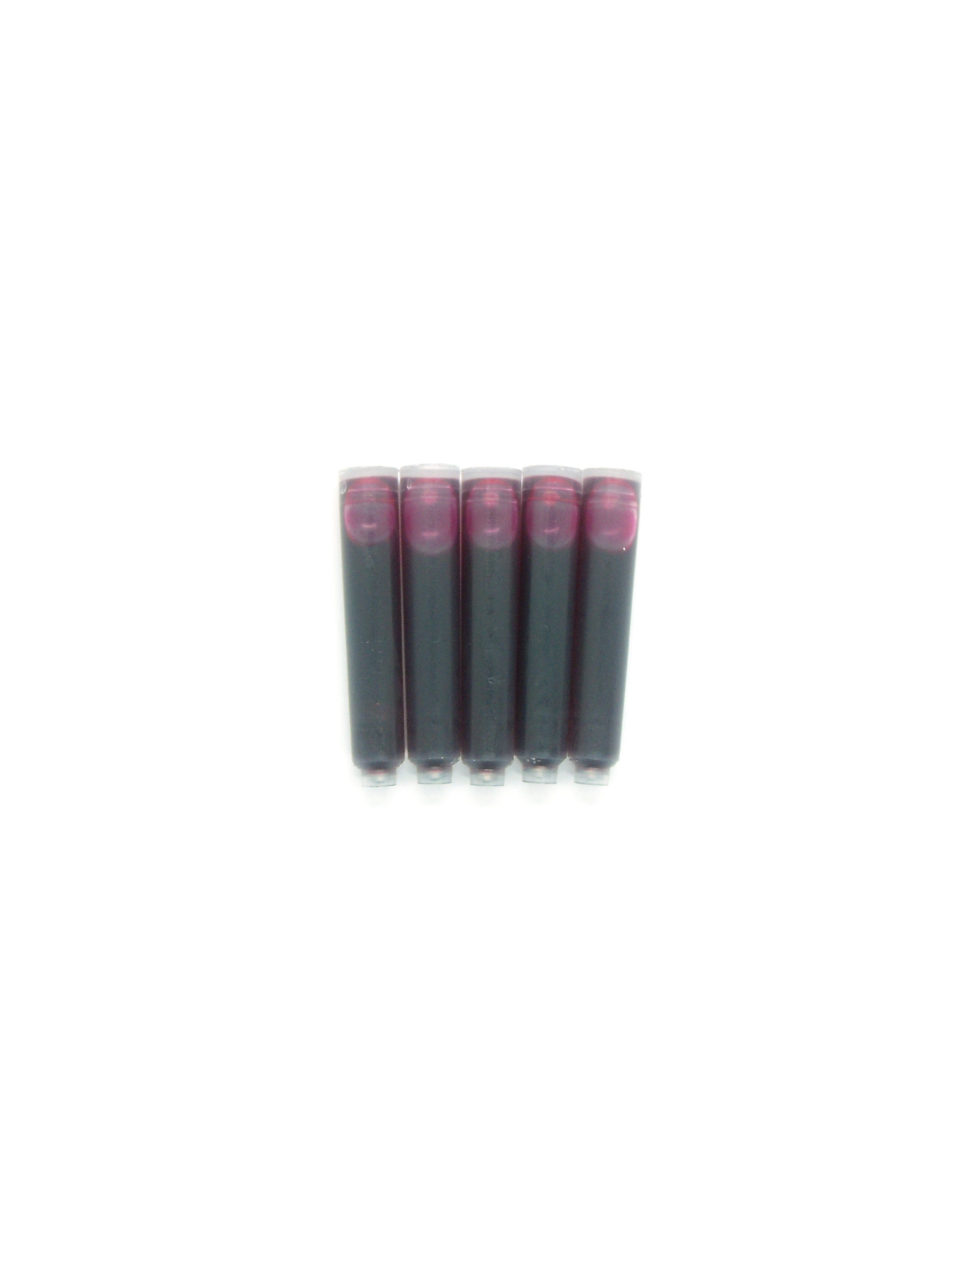 PenConverter Ink Cartridges For Sensa Fountain Pens (Pink)